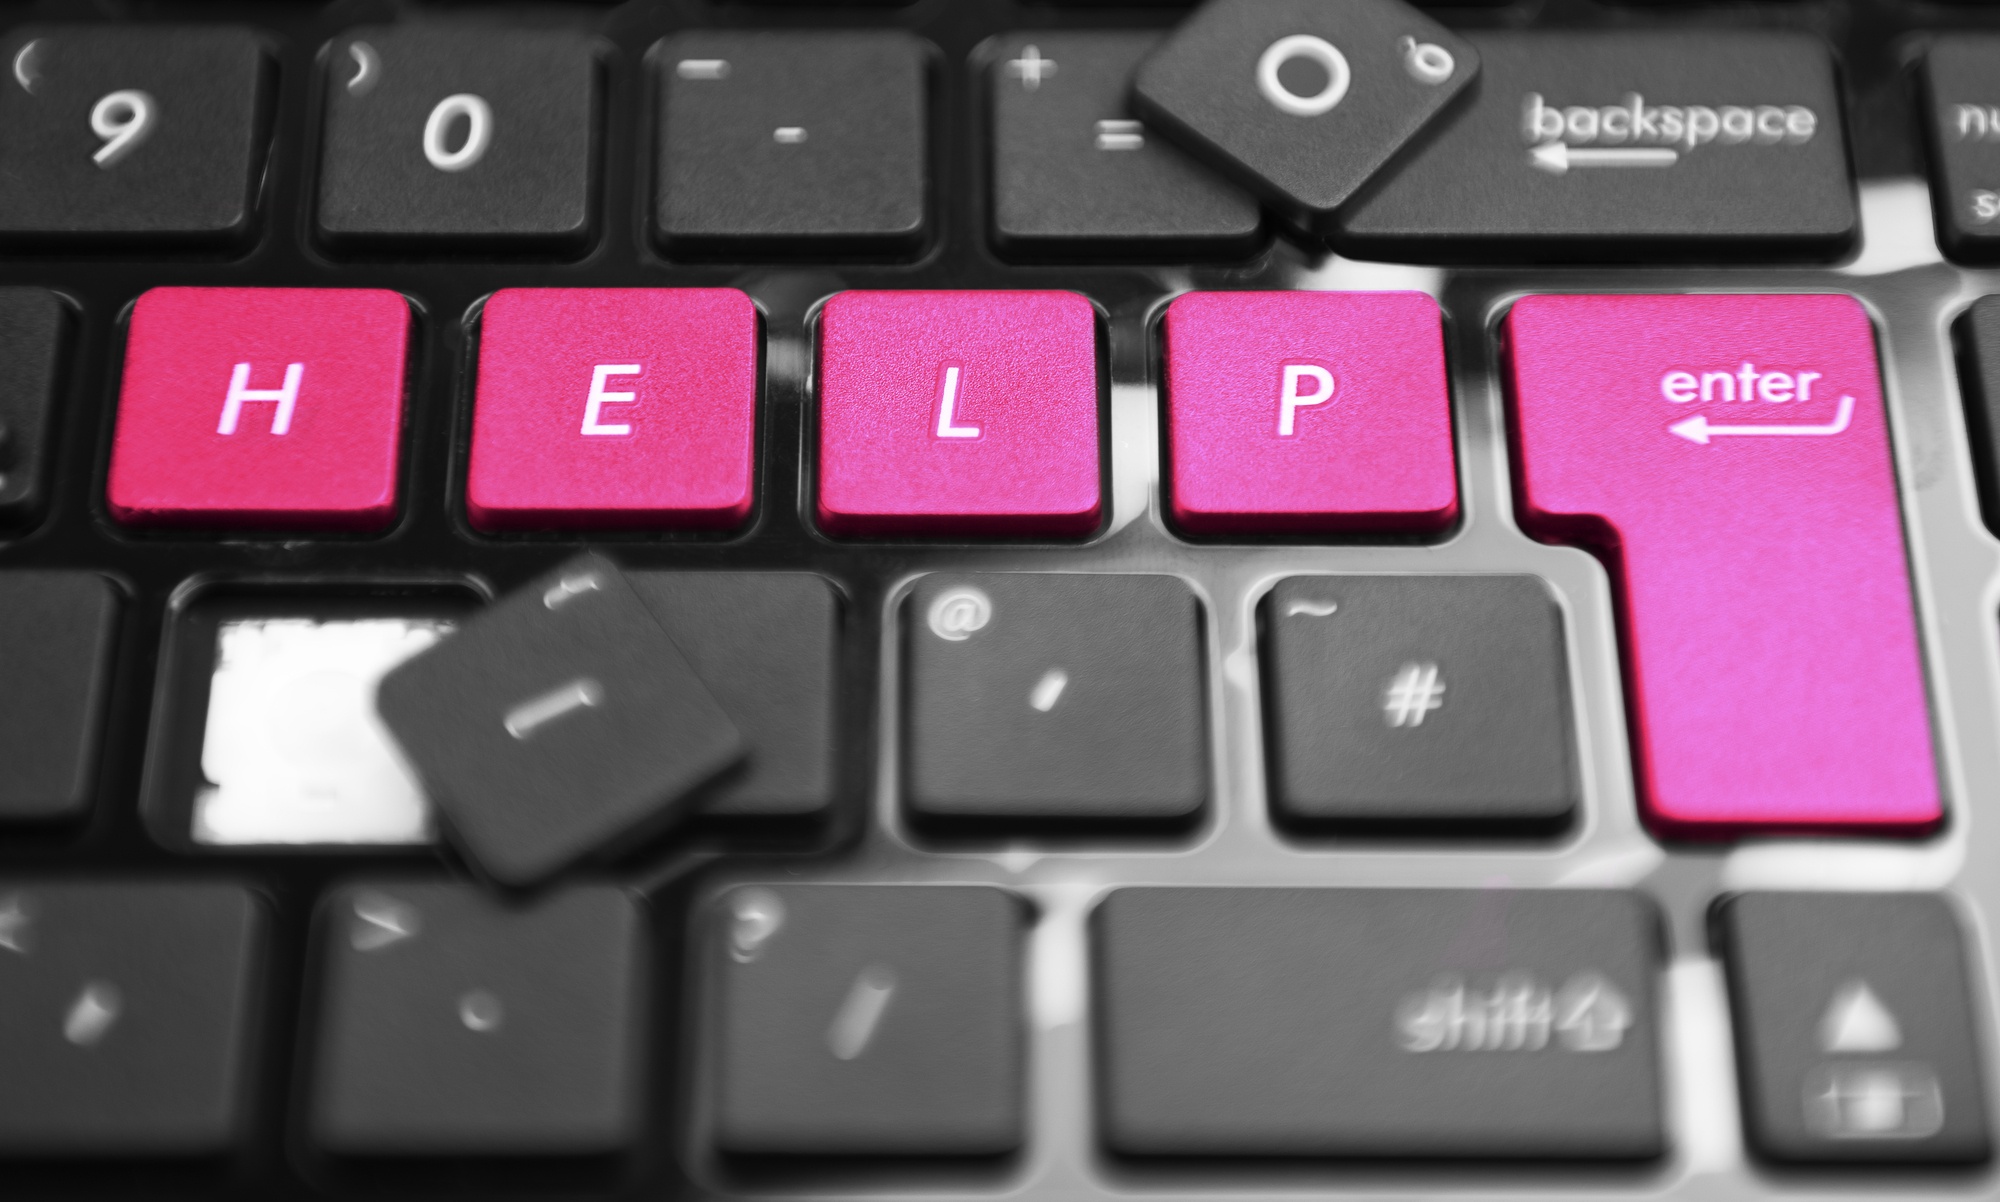 IT Support Desks represented by pink keyboard keys spelling help